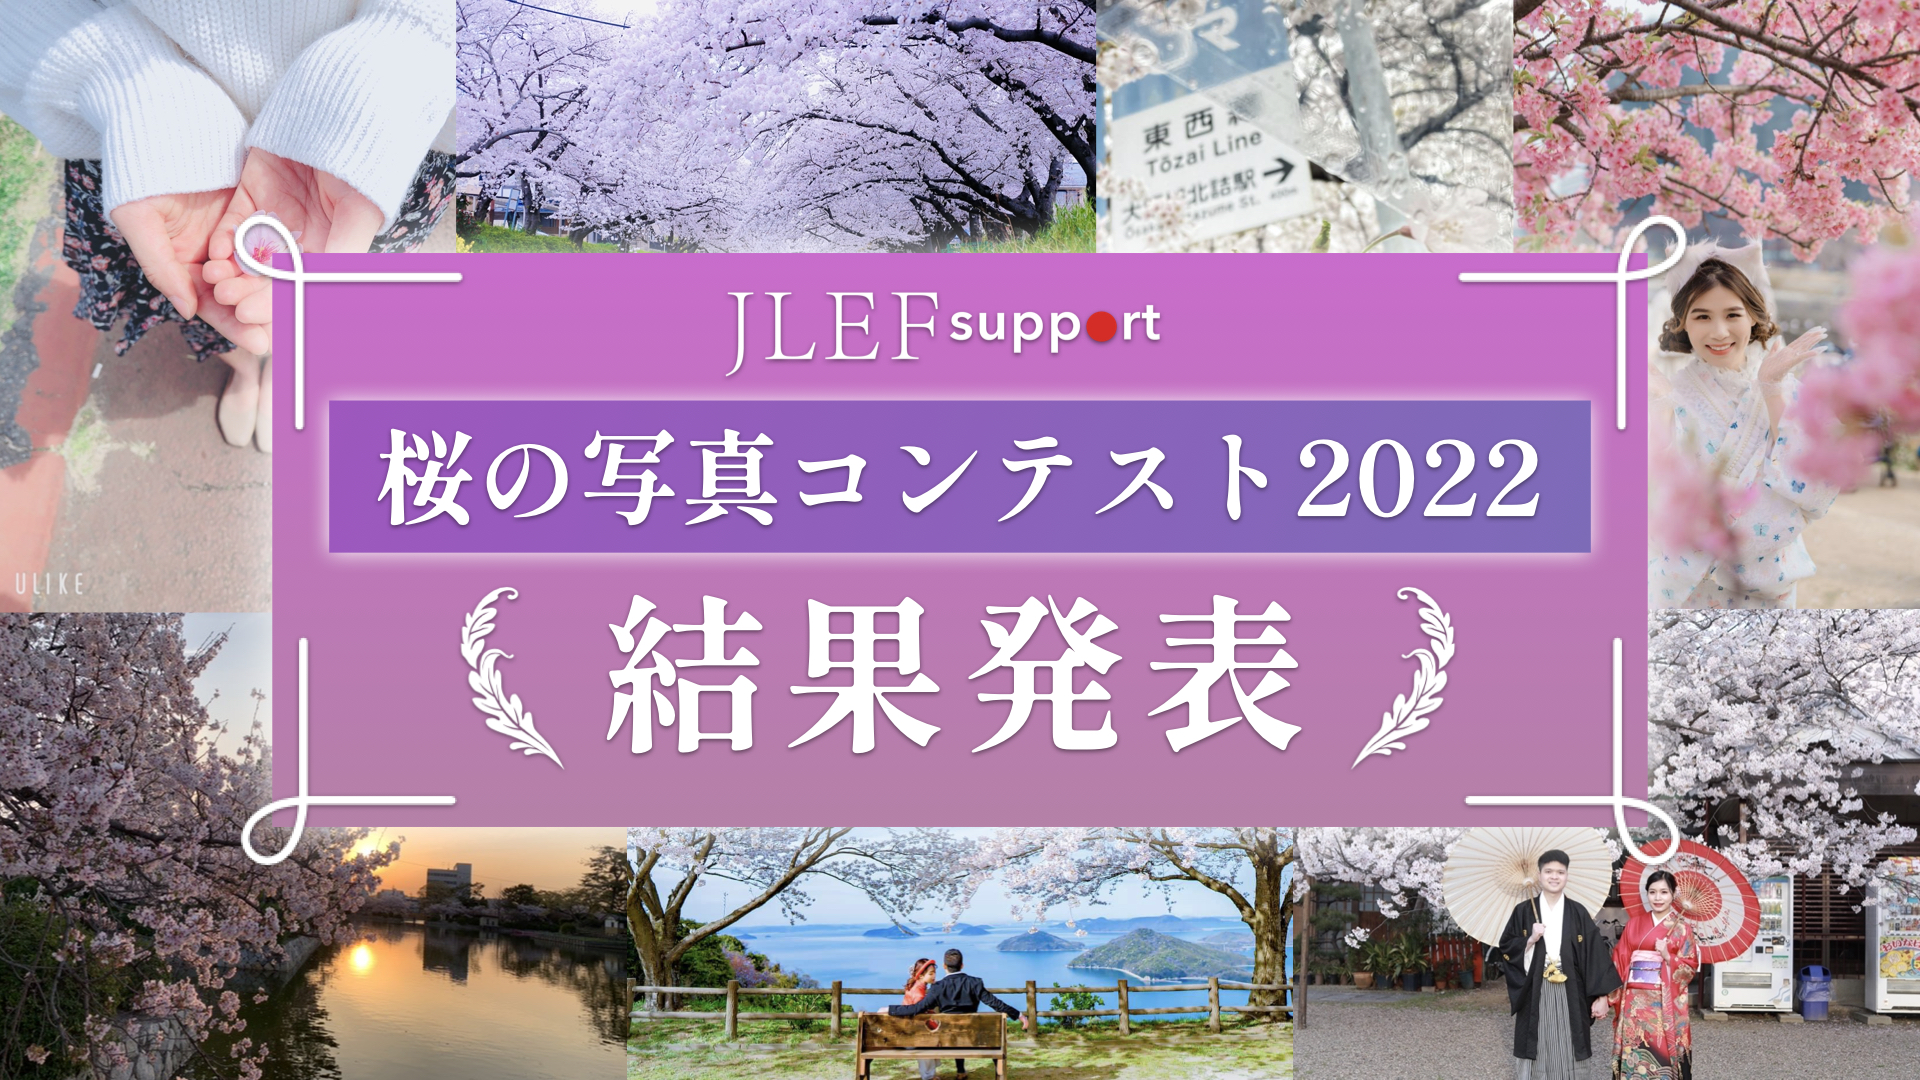 JLEF Support「桜の写真コンテスト2022」結果発表